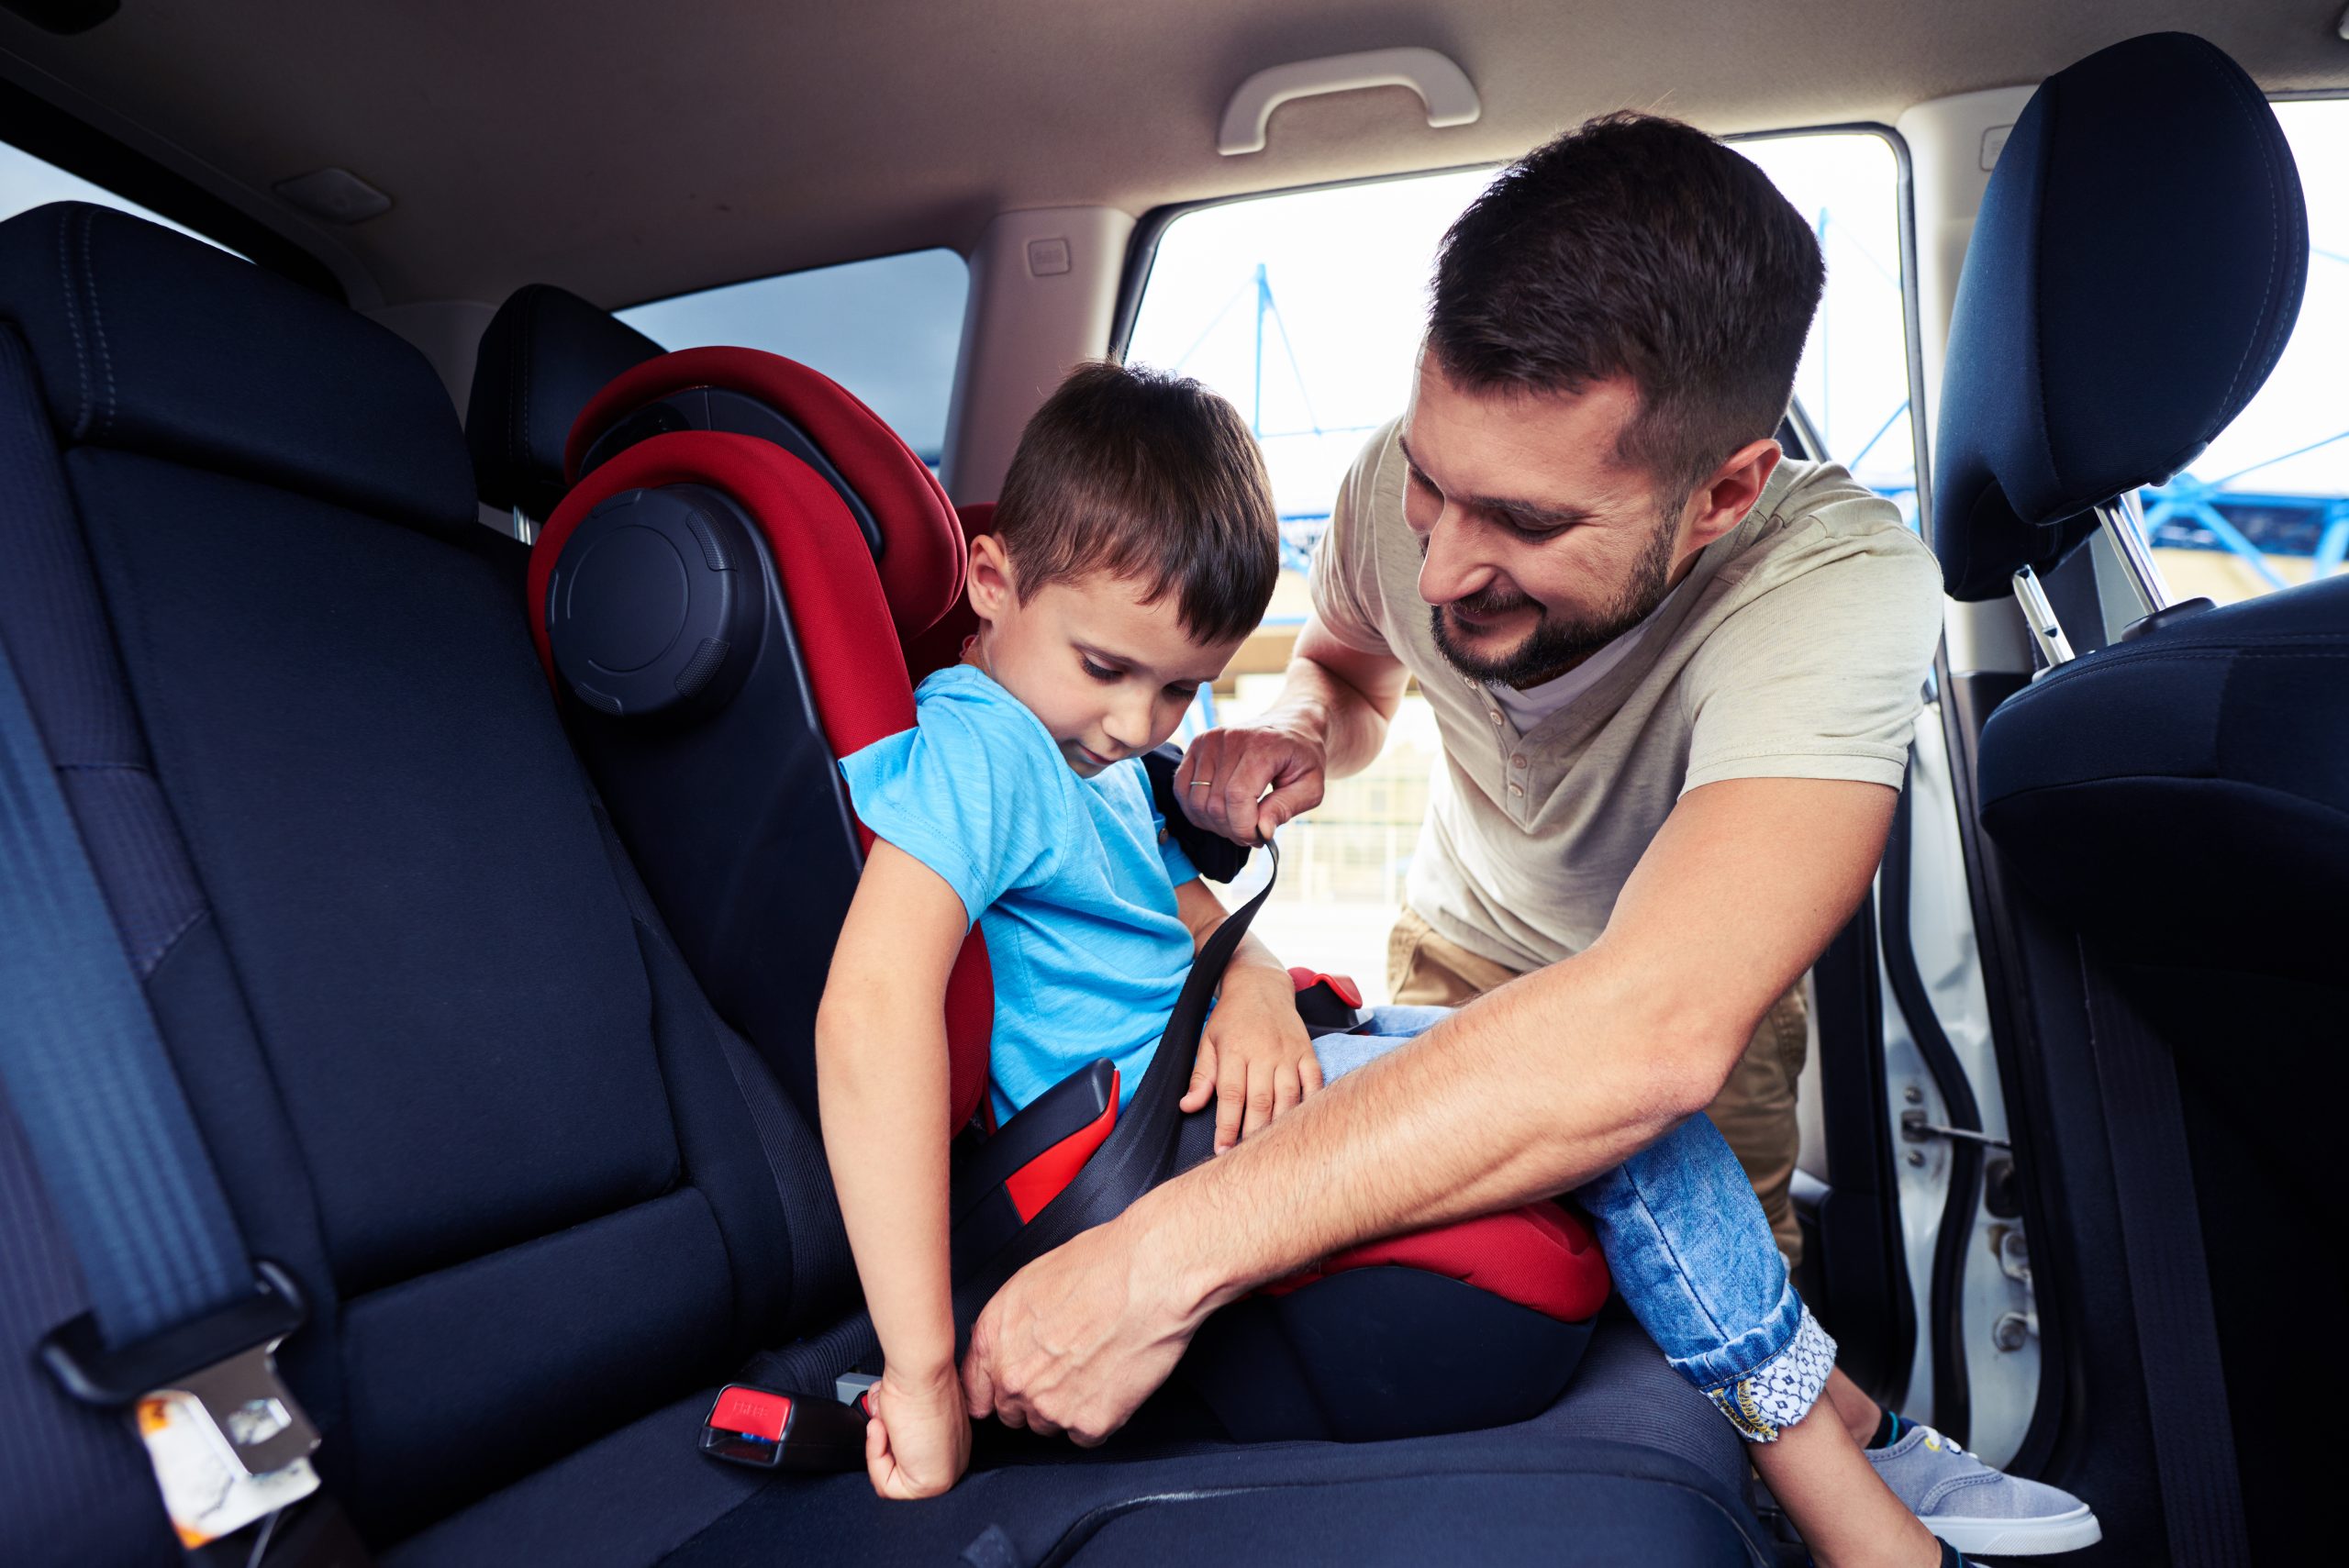 child car seat safety